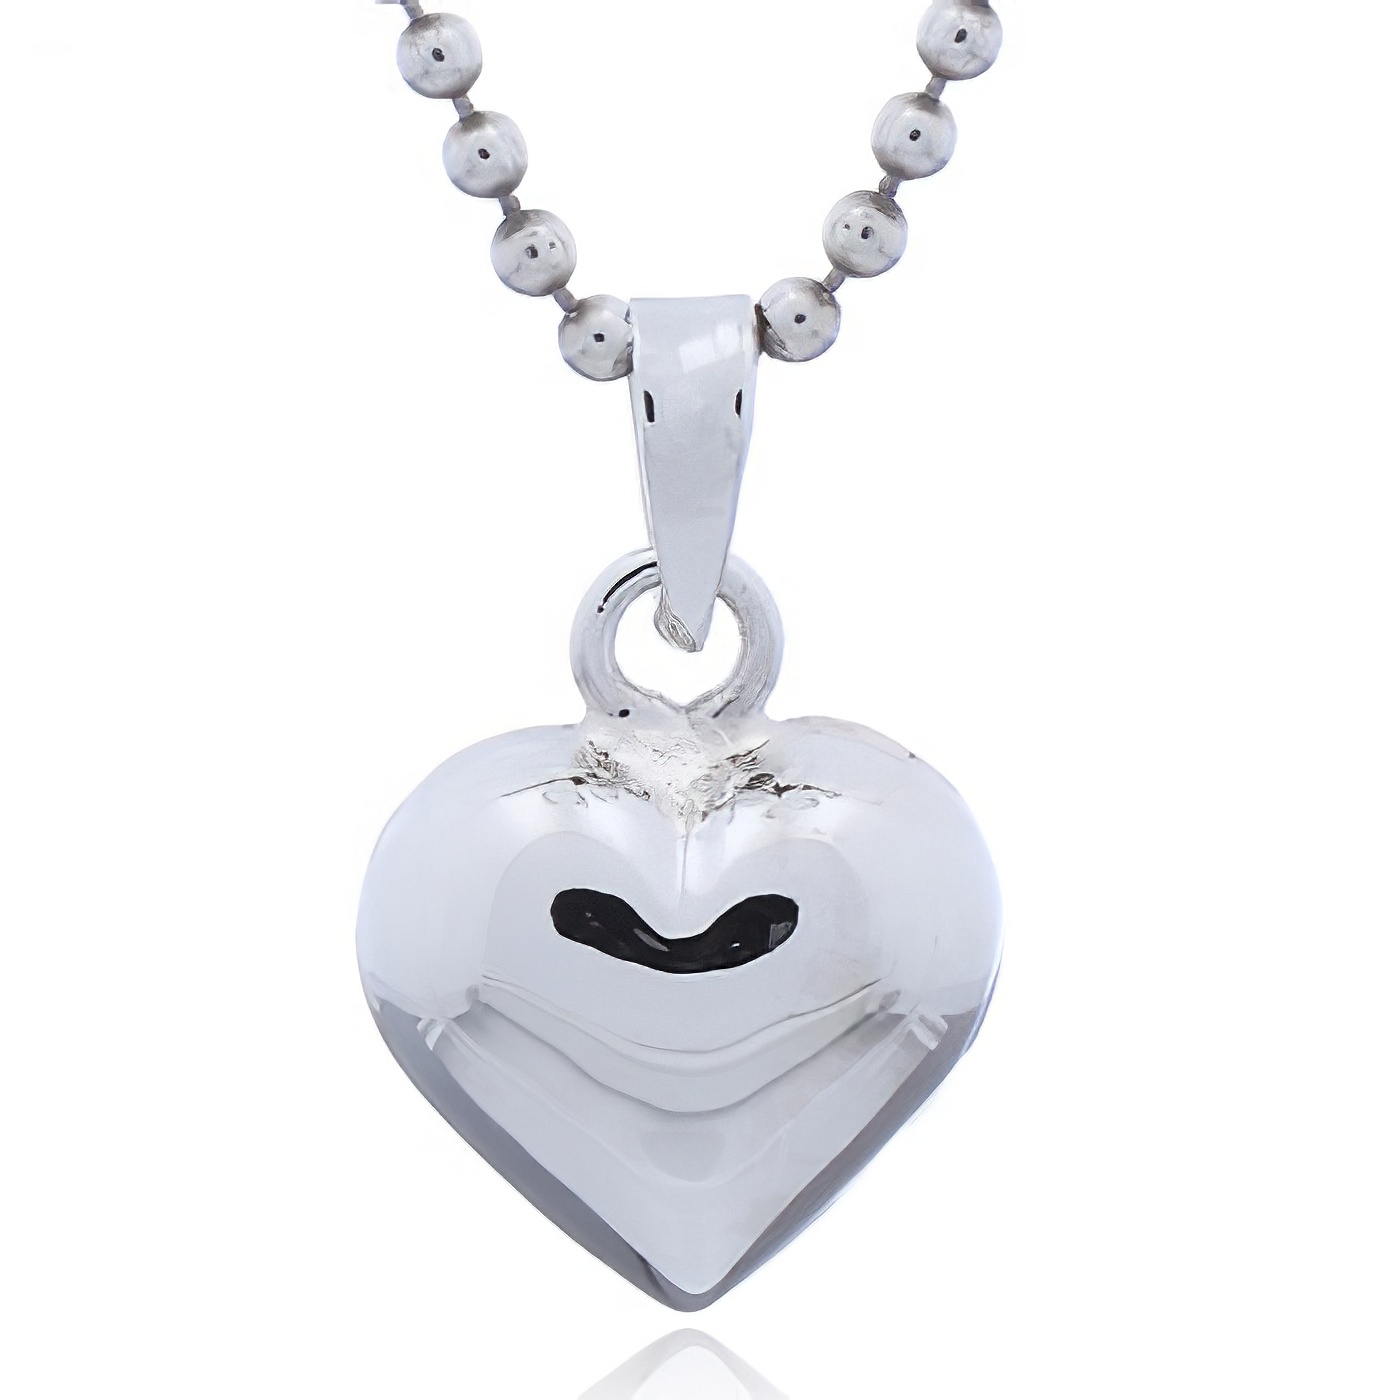 Shiny Puffed Heart Charm Small 925 Sterling Silver Pendant by BeYindi 